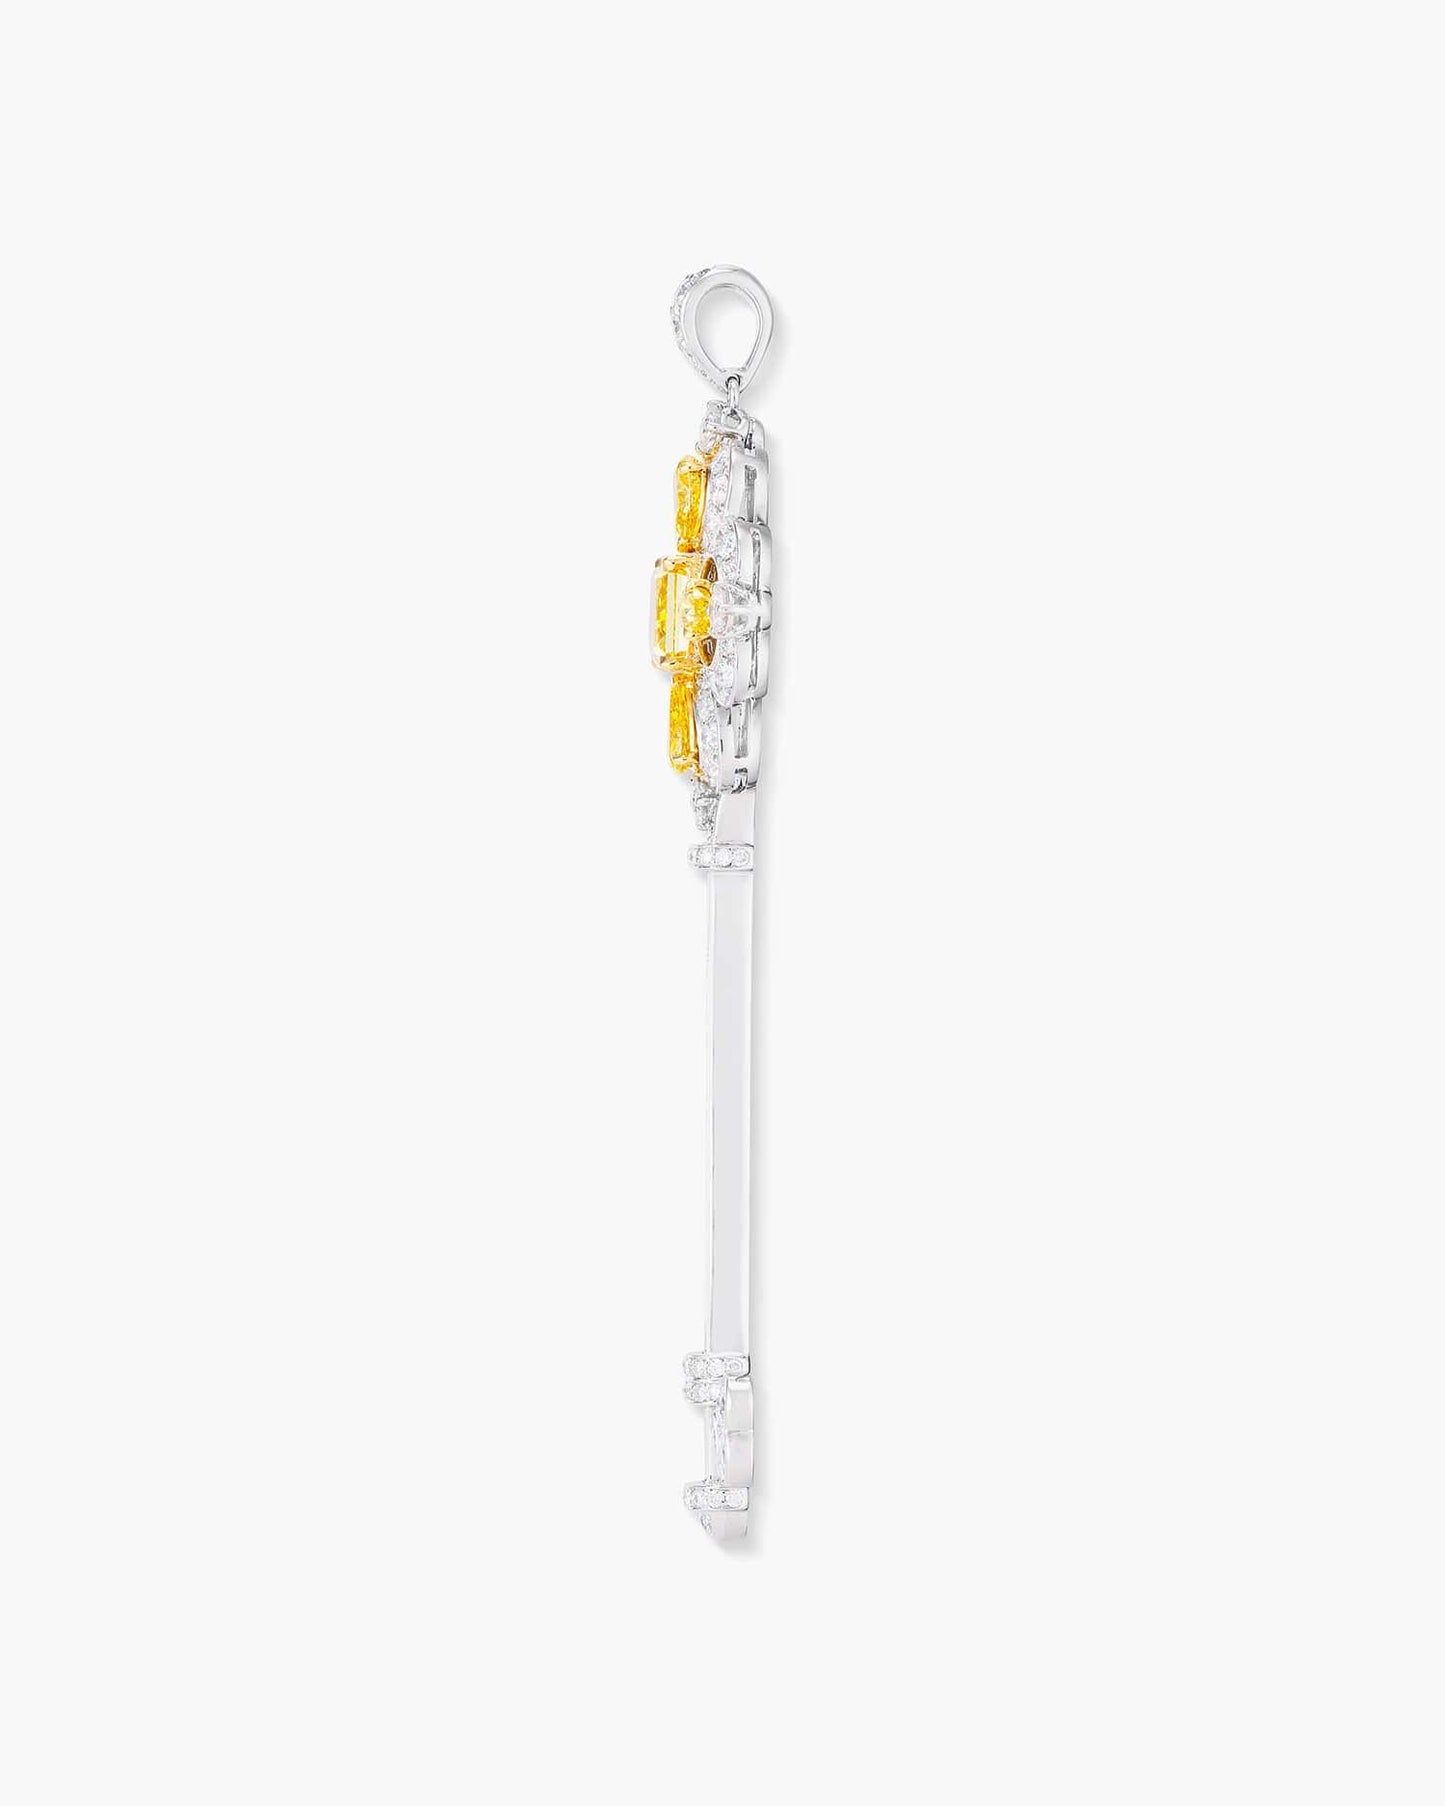 Fancy Shaped Yellow and White Diamond Key Pendant Necklace, 5.15 carats